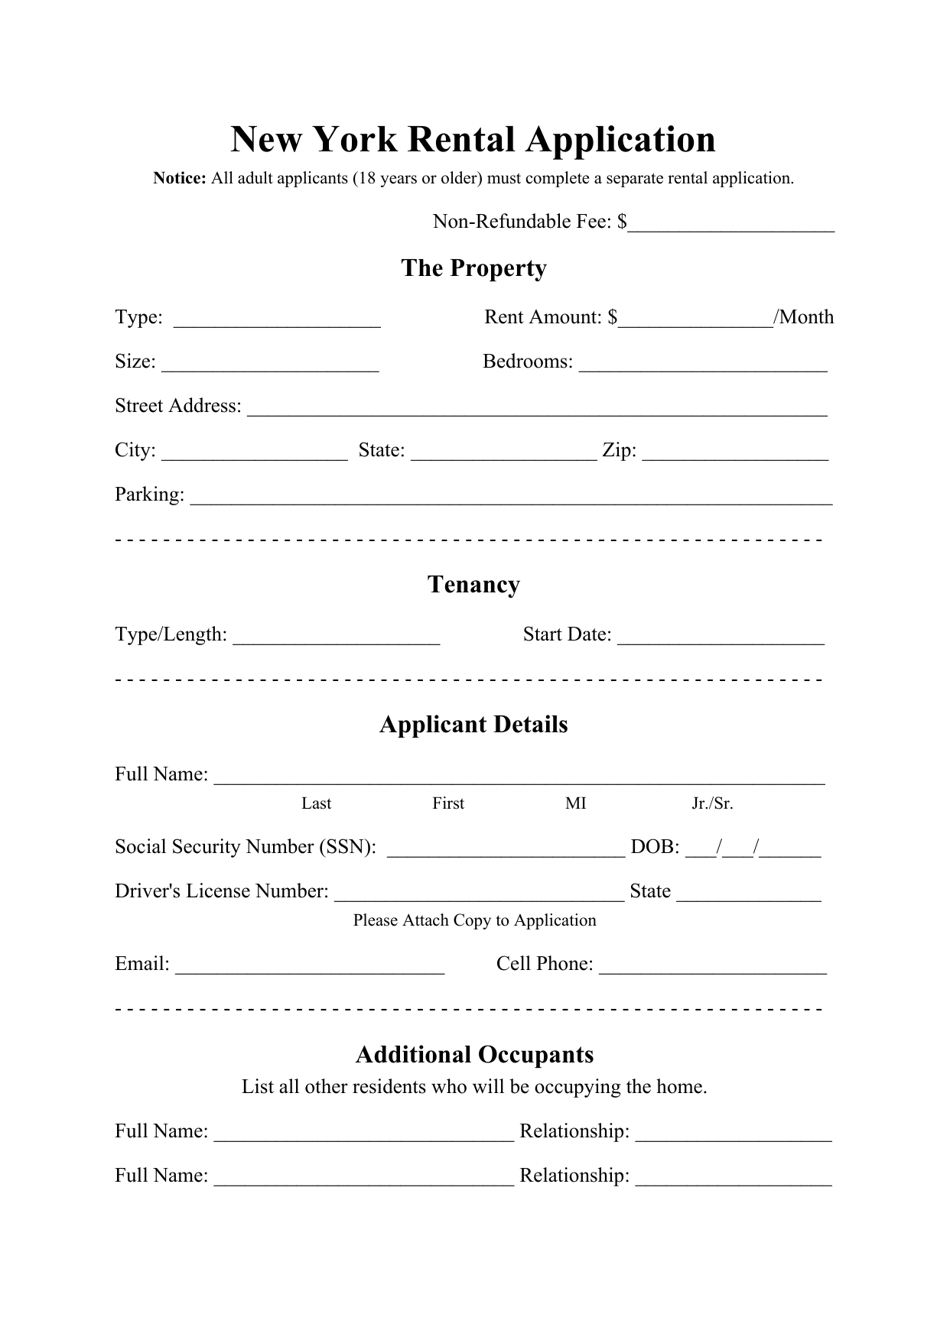 new-york-rental-application-form-download-printable-pdf-templateroller